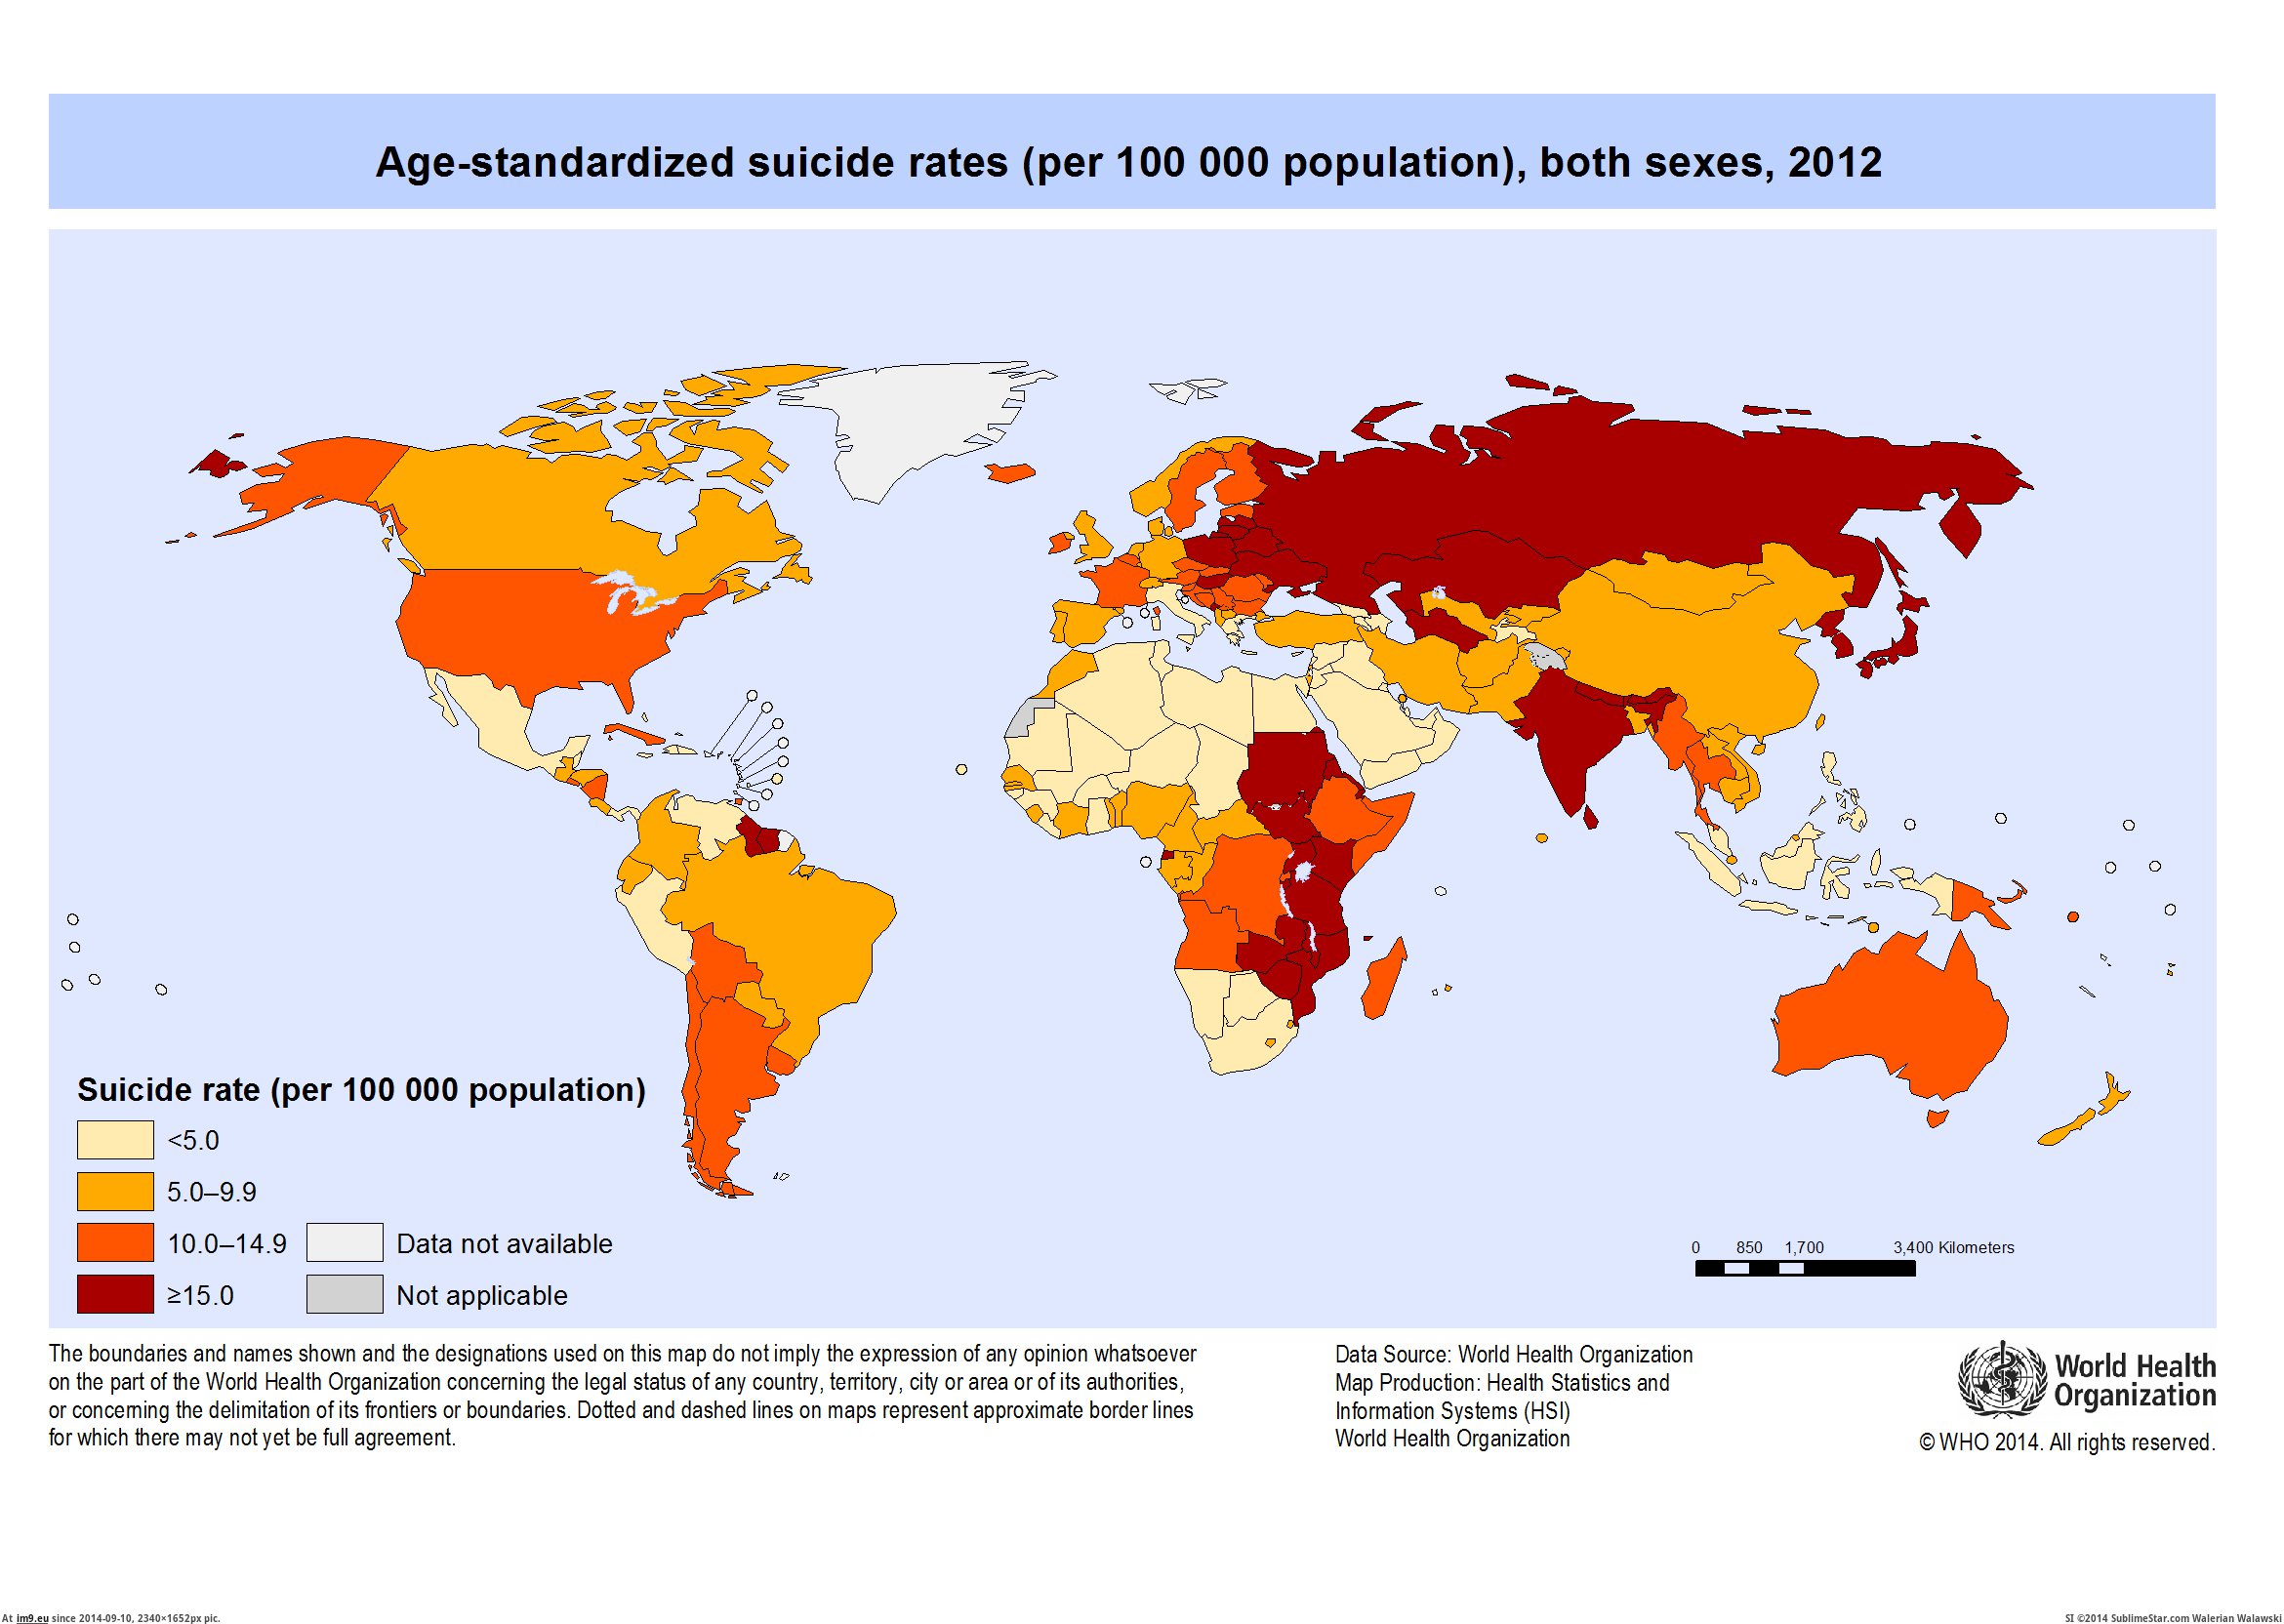 http://p.im9.eu/dataisbeautiful-global-suicide-rates.jpg